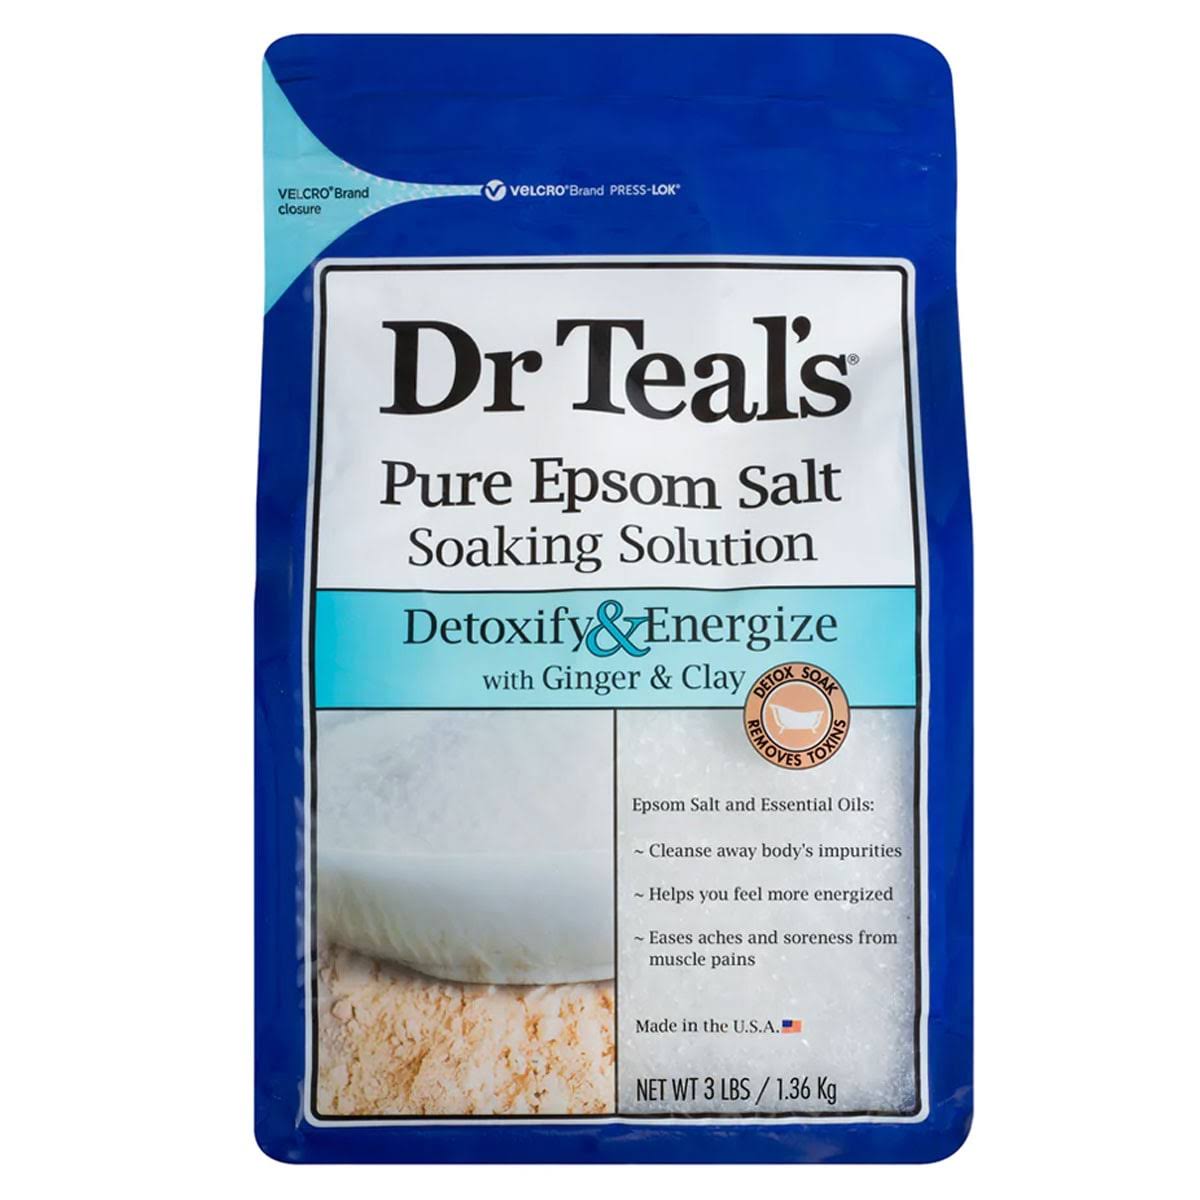 Dr Teal's Pure Epsom Salt Soaking Solution - 3lbs